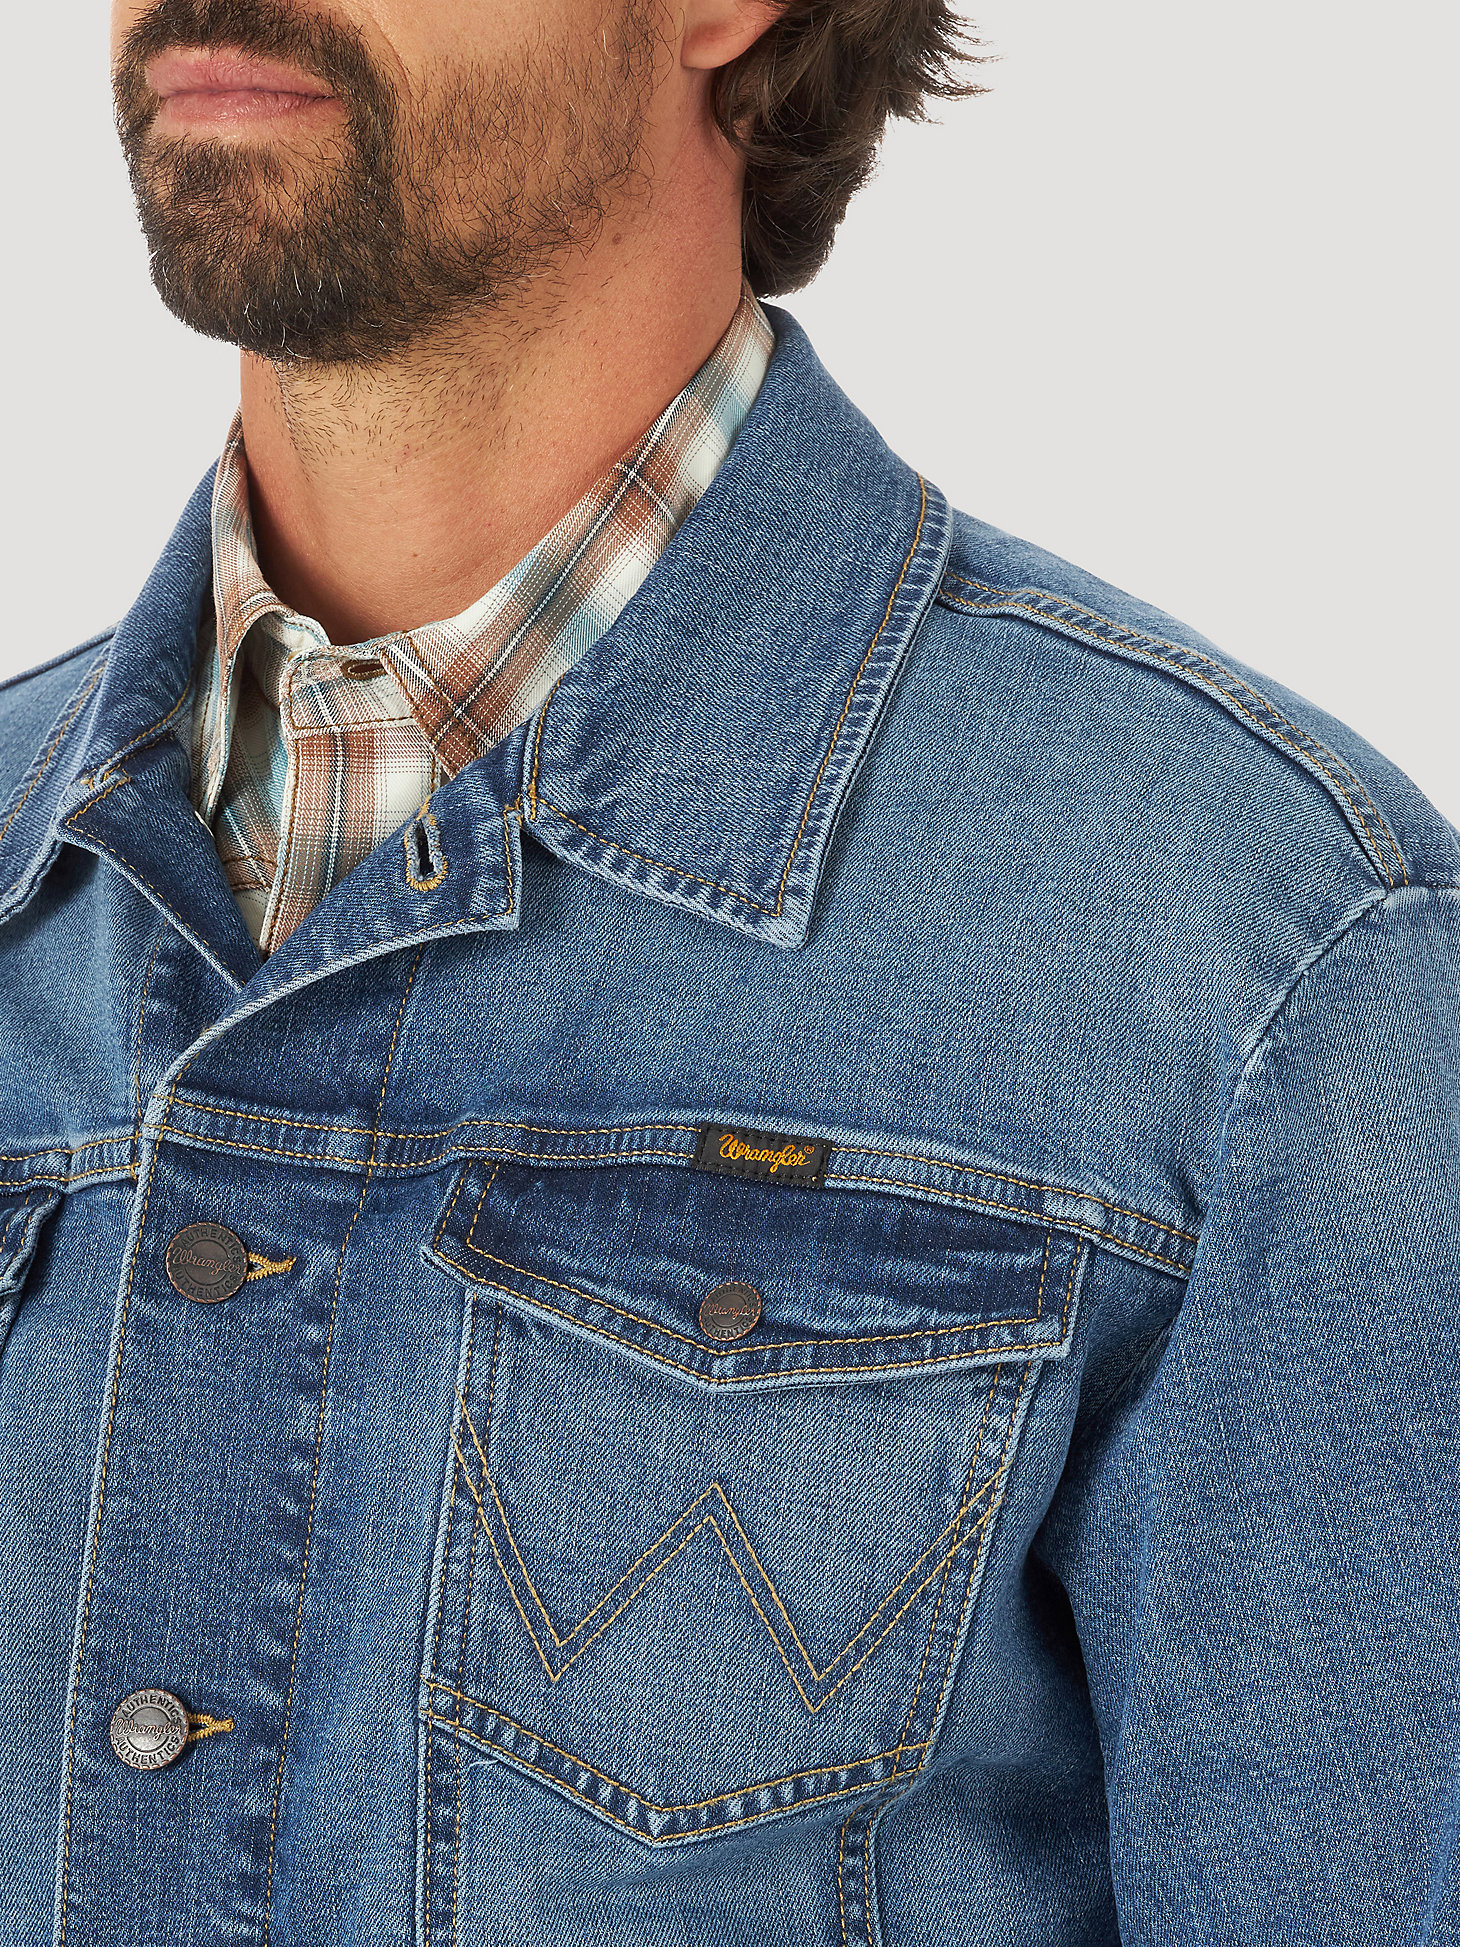 Men's Wrangler® Retro Unlined Denim Jacket in Antique Navy alternative view 1